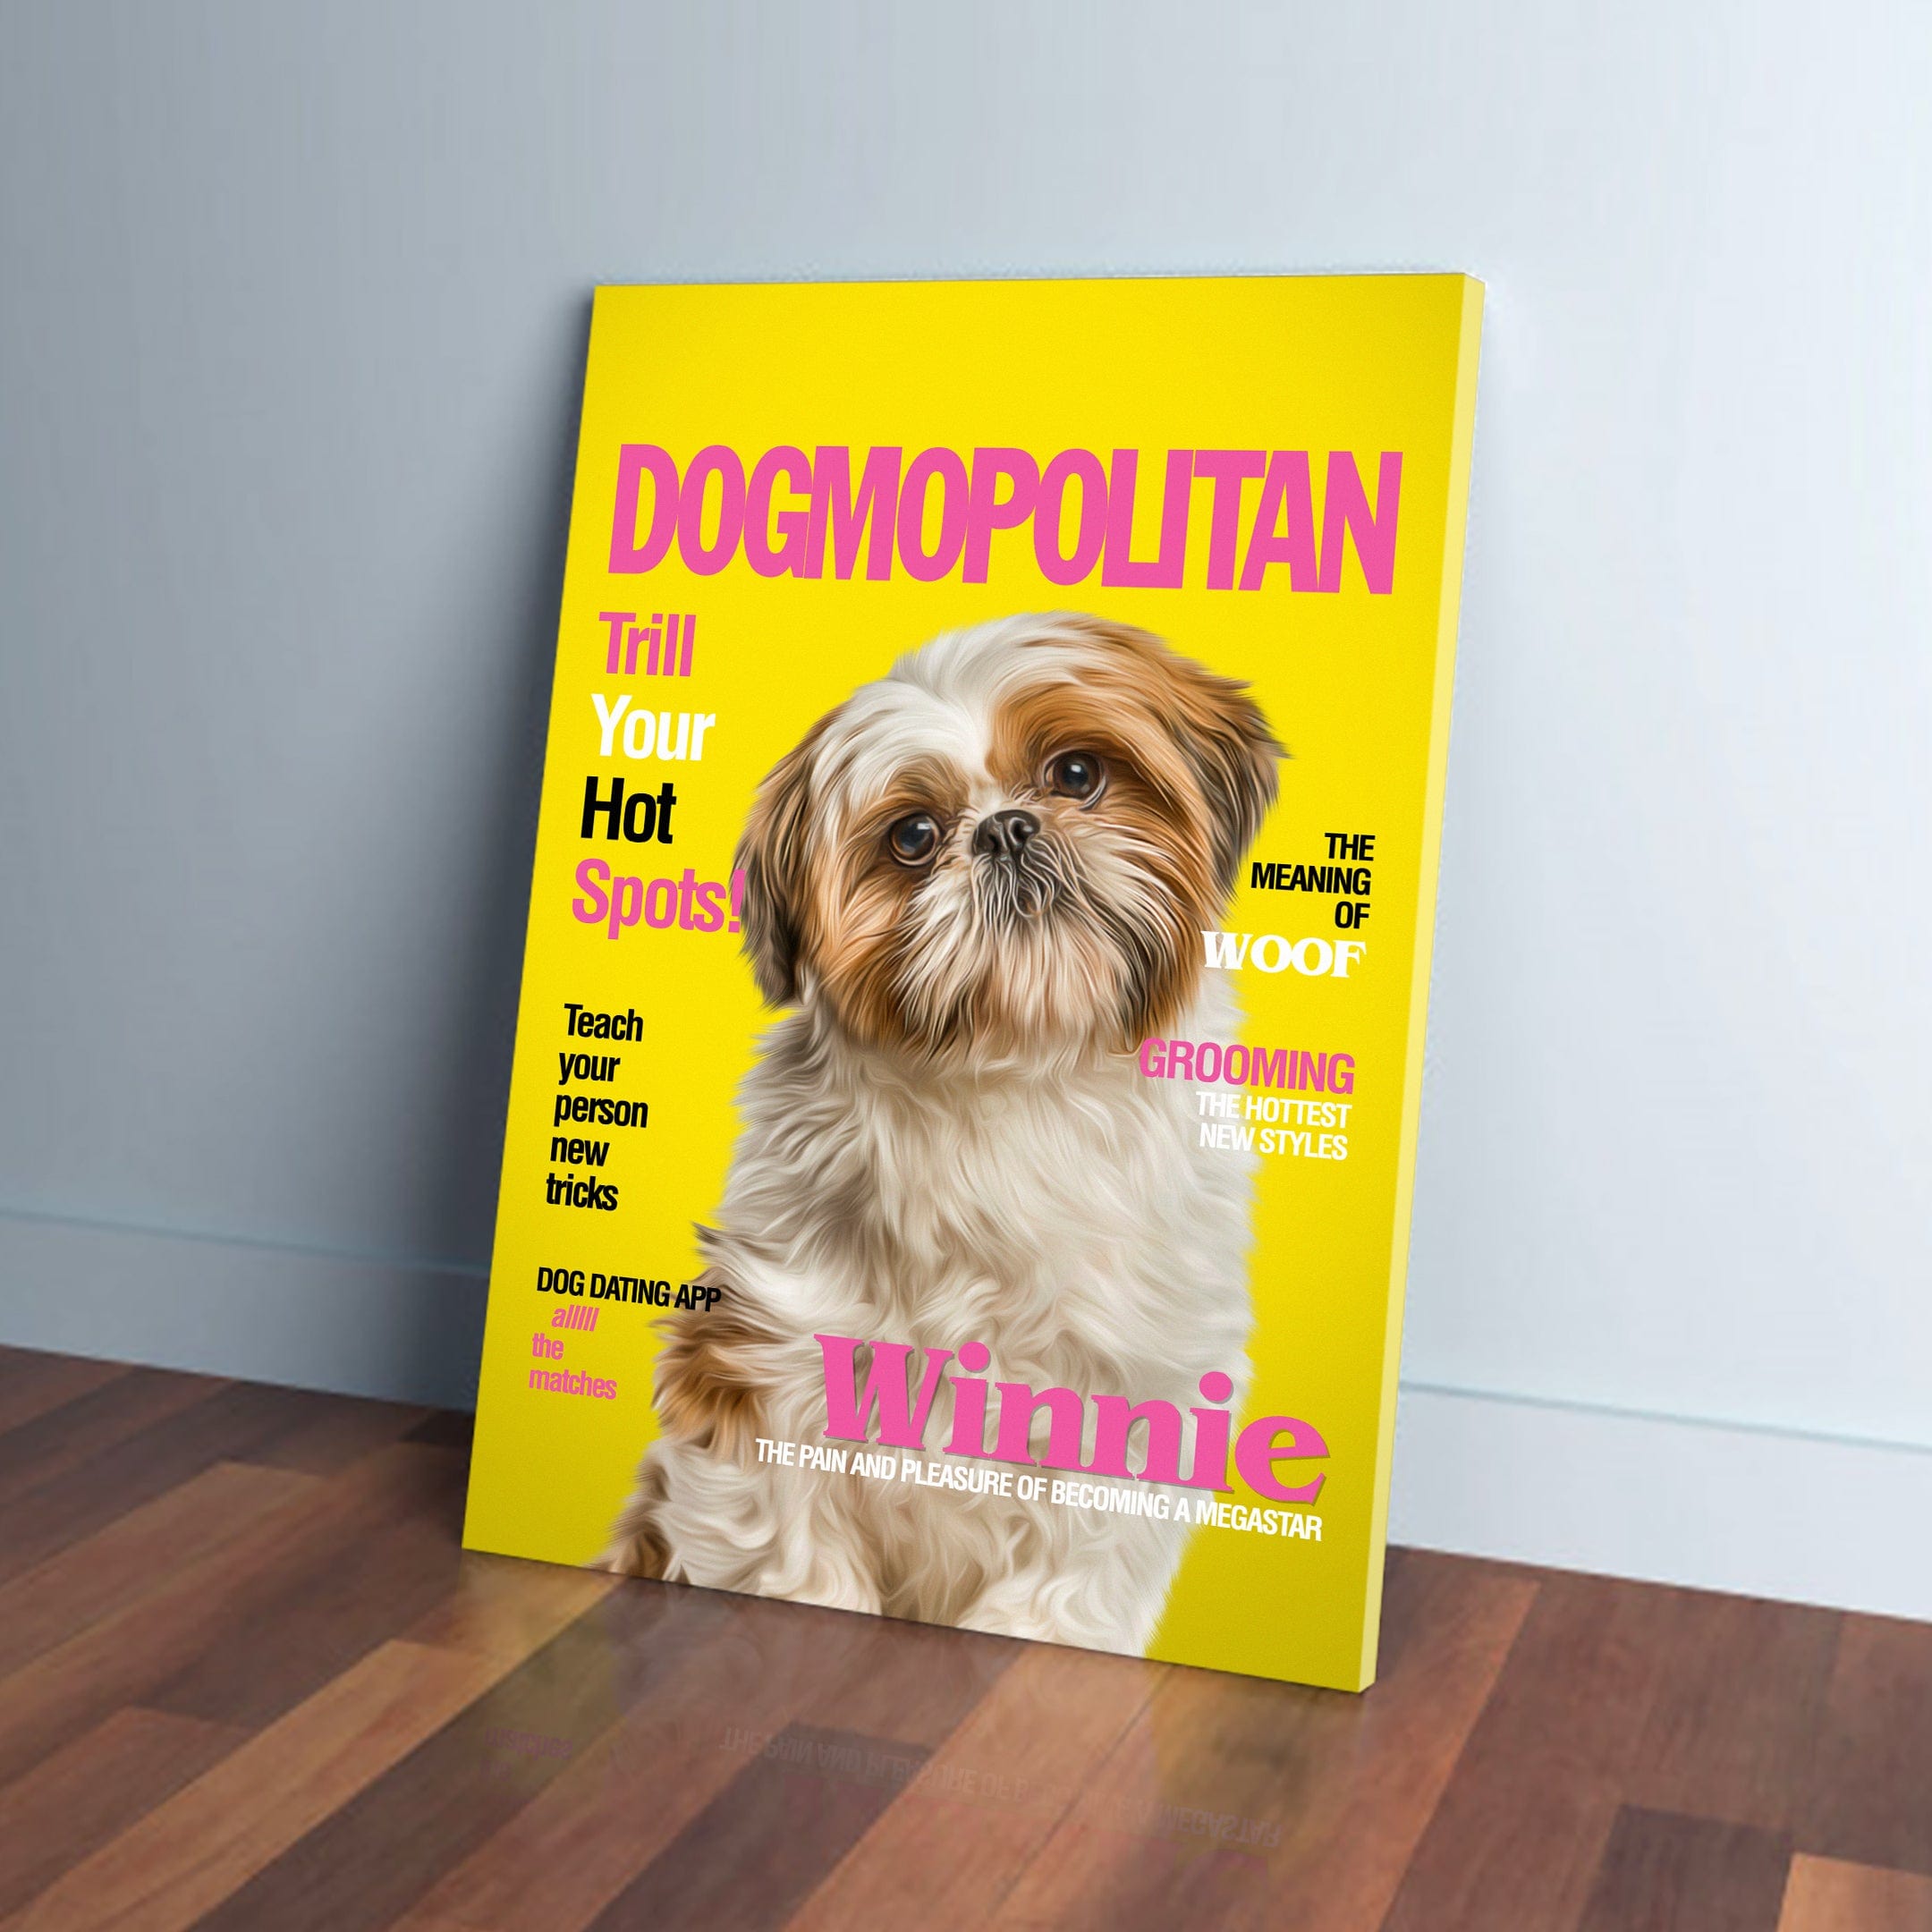 Lienzo personalizado para mascotas &#39;Dogmopolitan&#39;